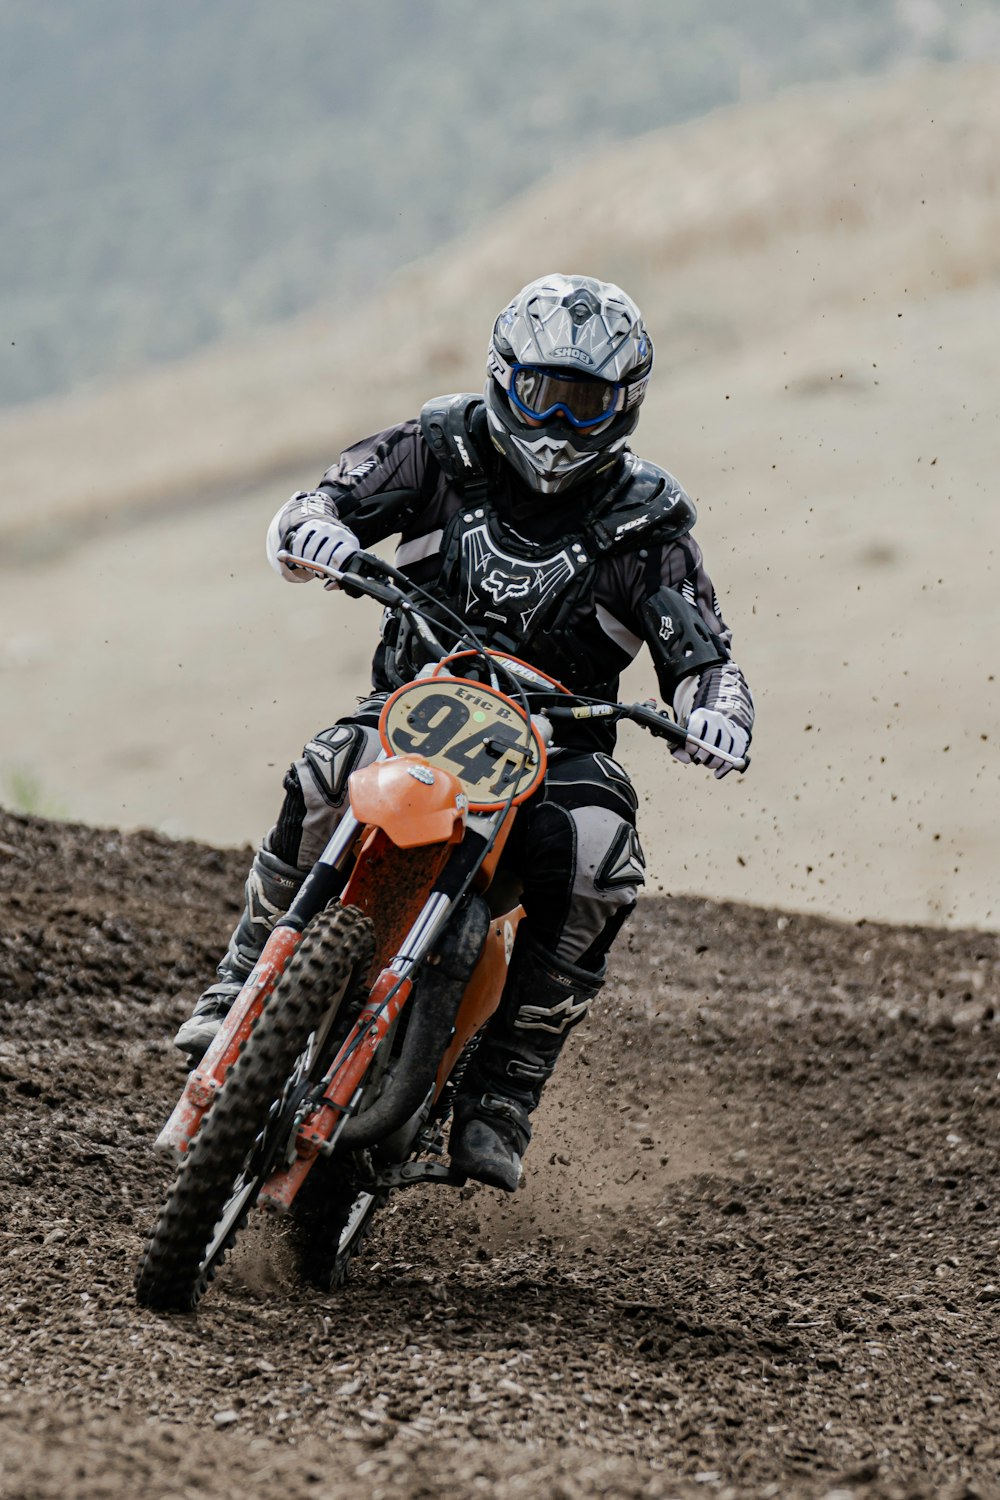 Probar lechuga anunciar Man in black and orange motorcycle suit riding orange and black motocross  dirt bike photo – Free Helmet Image on Unsplash